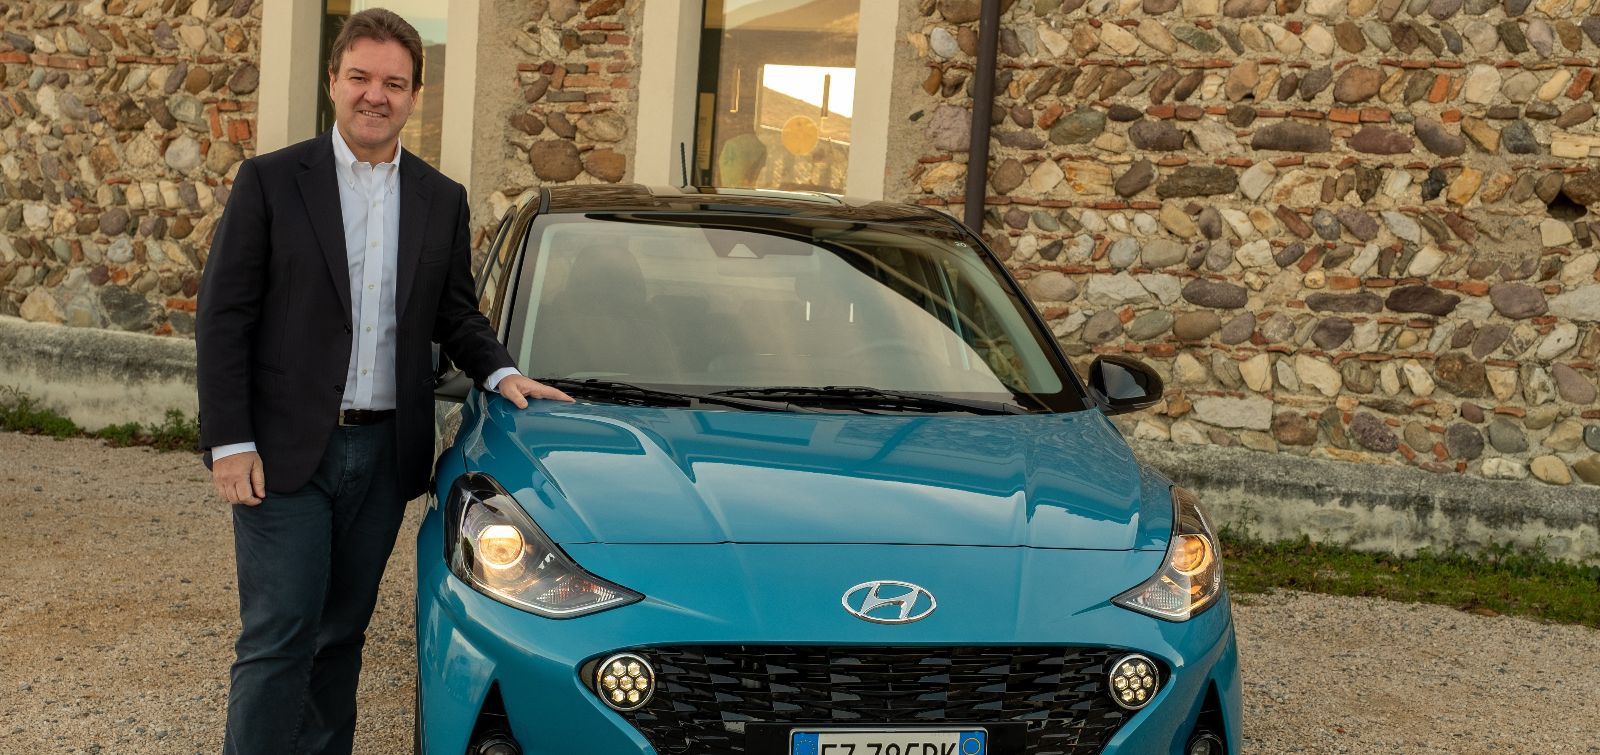 Andrea Crespi intervista managing director Hyundai Motor Italy